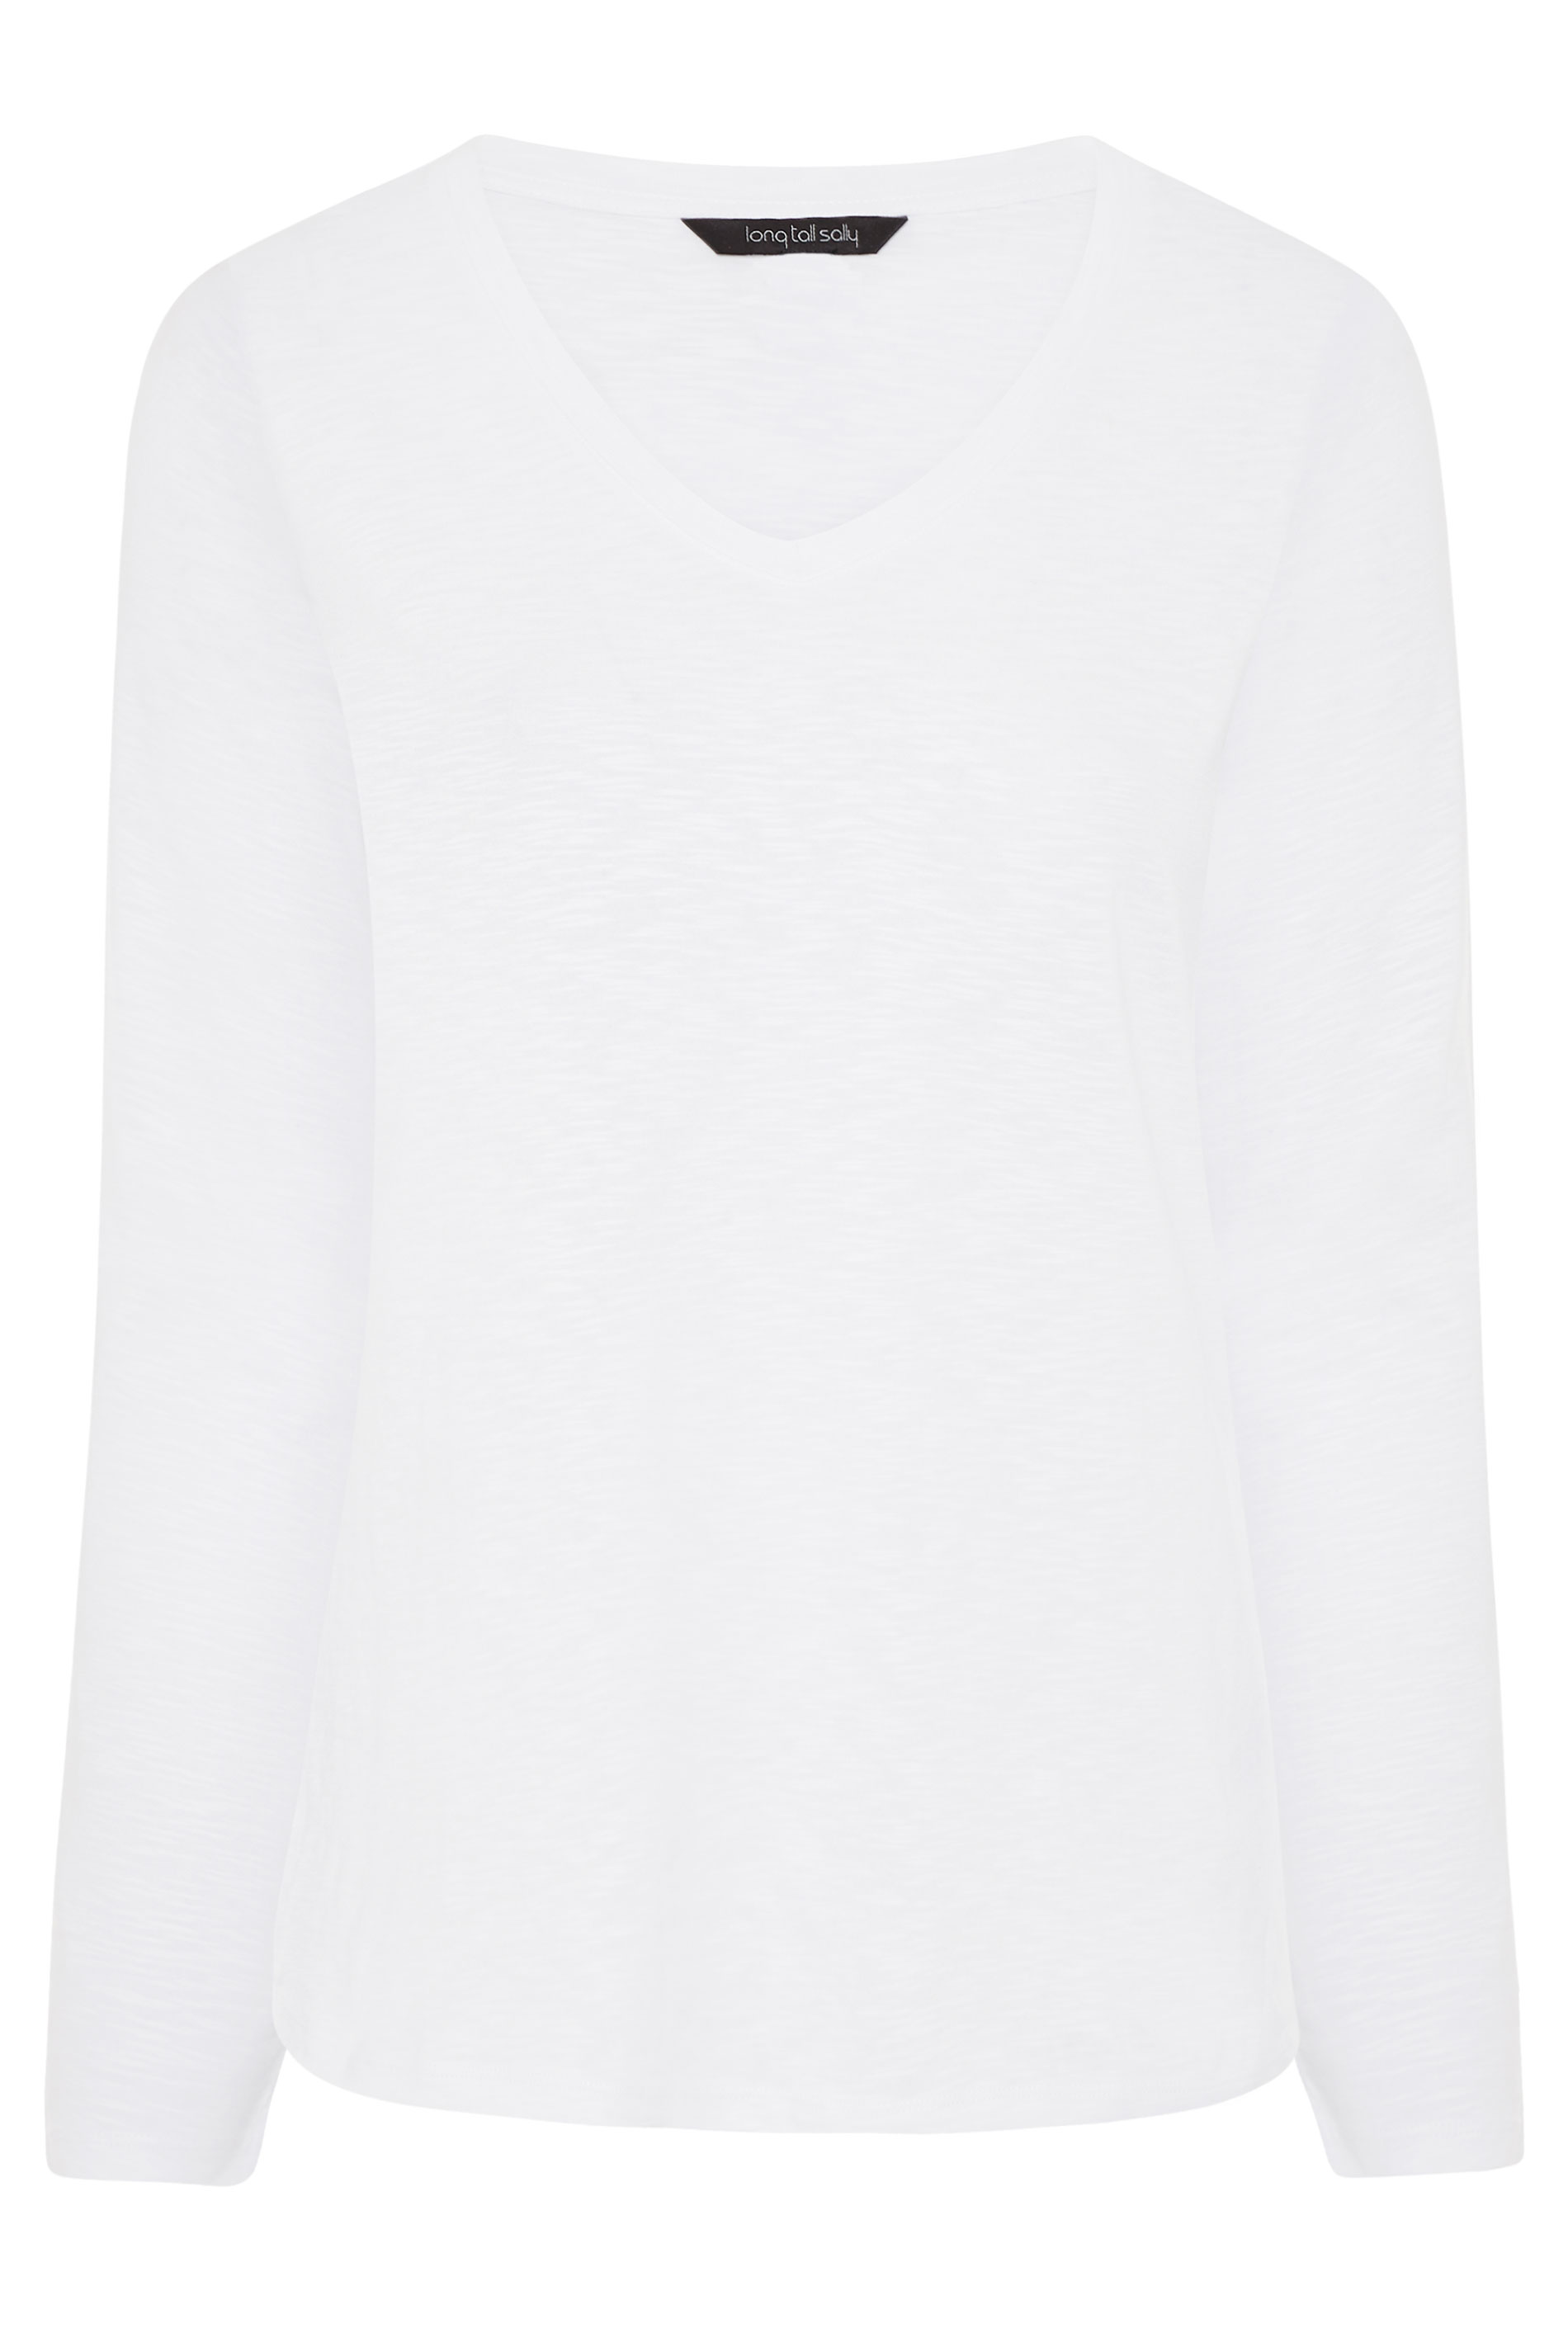 White Cotton V-Neck Long Sleeve Top | Long Tall Sally